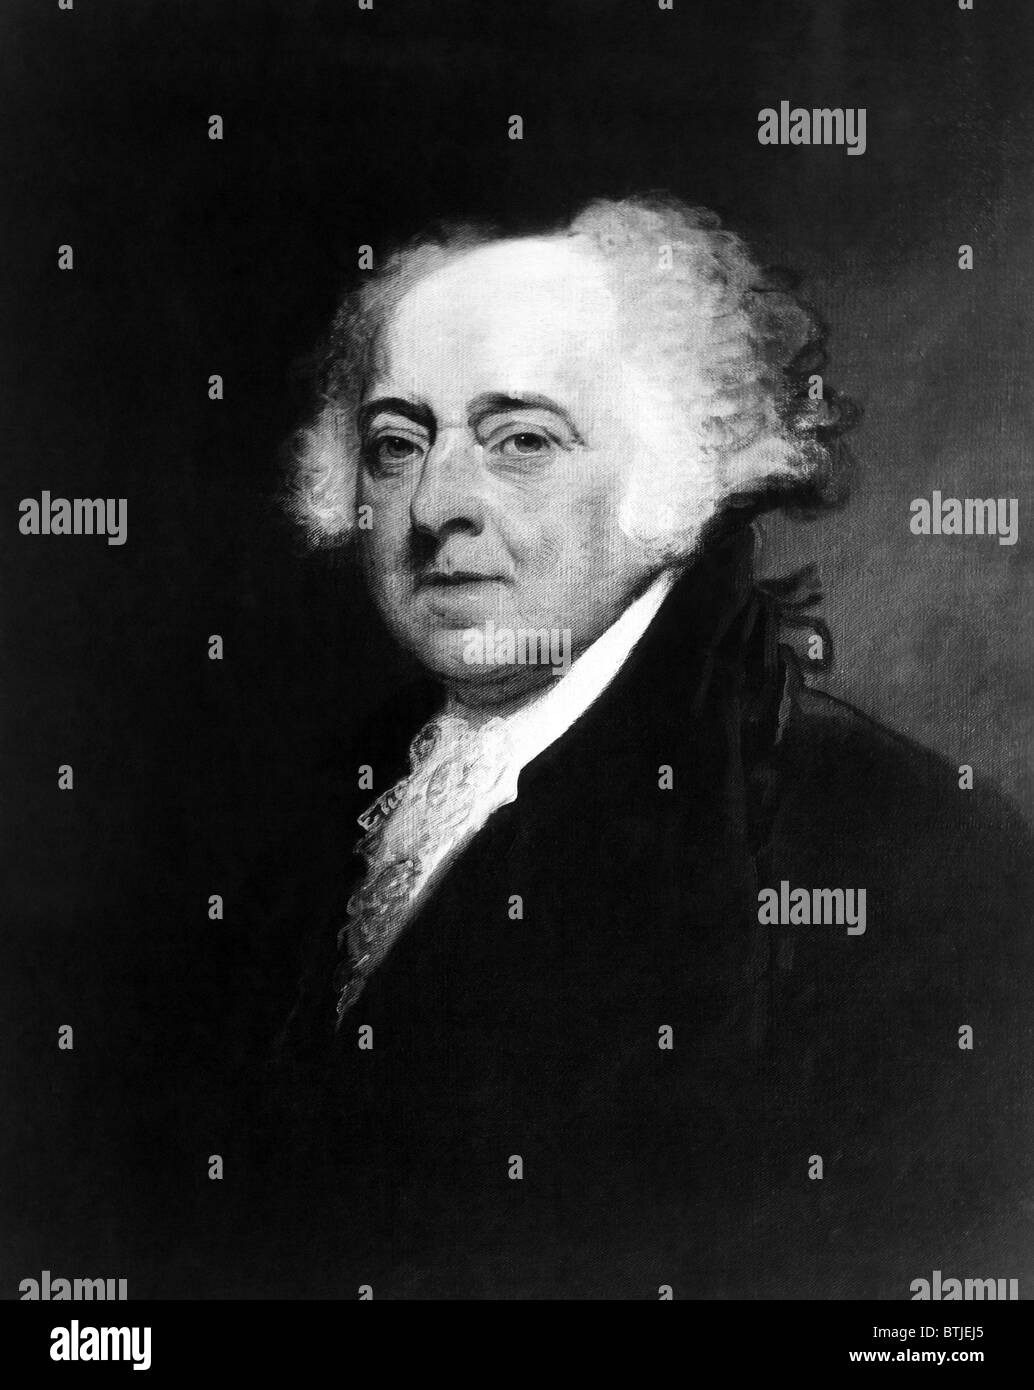 John Adams (1735-1826), US-Präsident (1797-1801). Porträt von Gilbert Stuart 1798 gemalt. Höflichkeit: CSU Archive/Evere Stockfoto